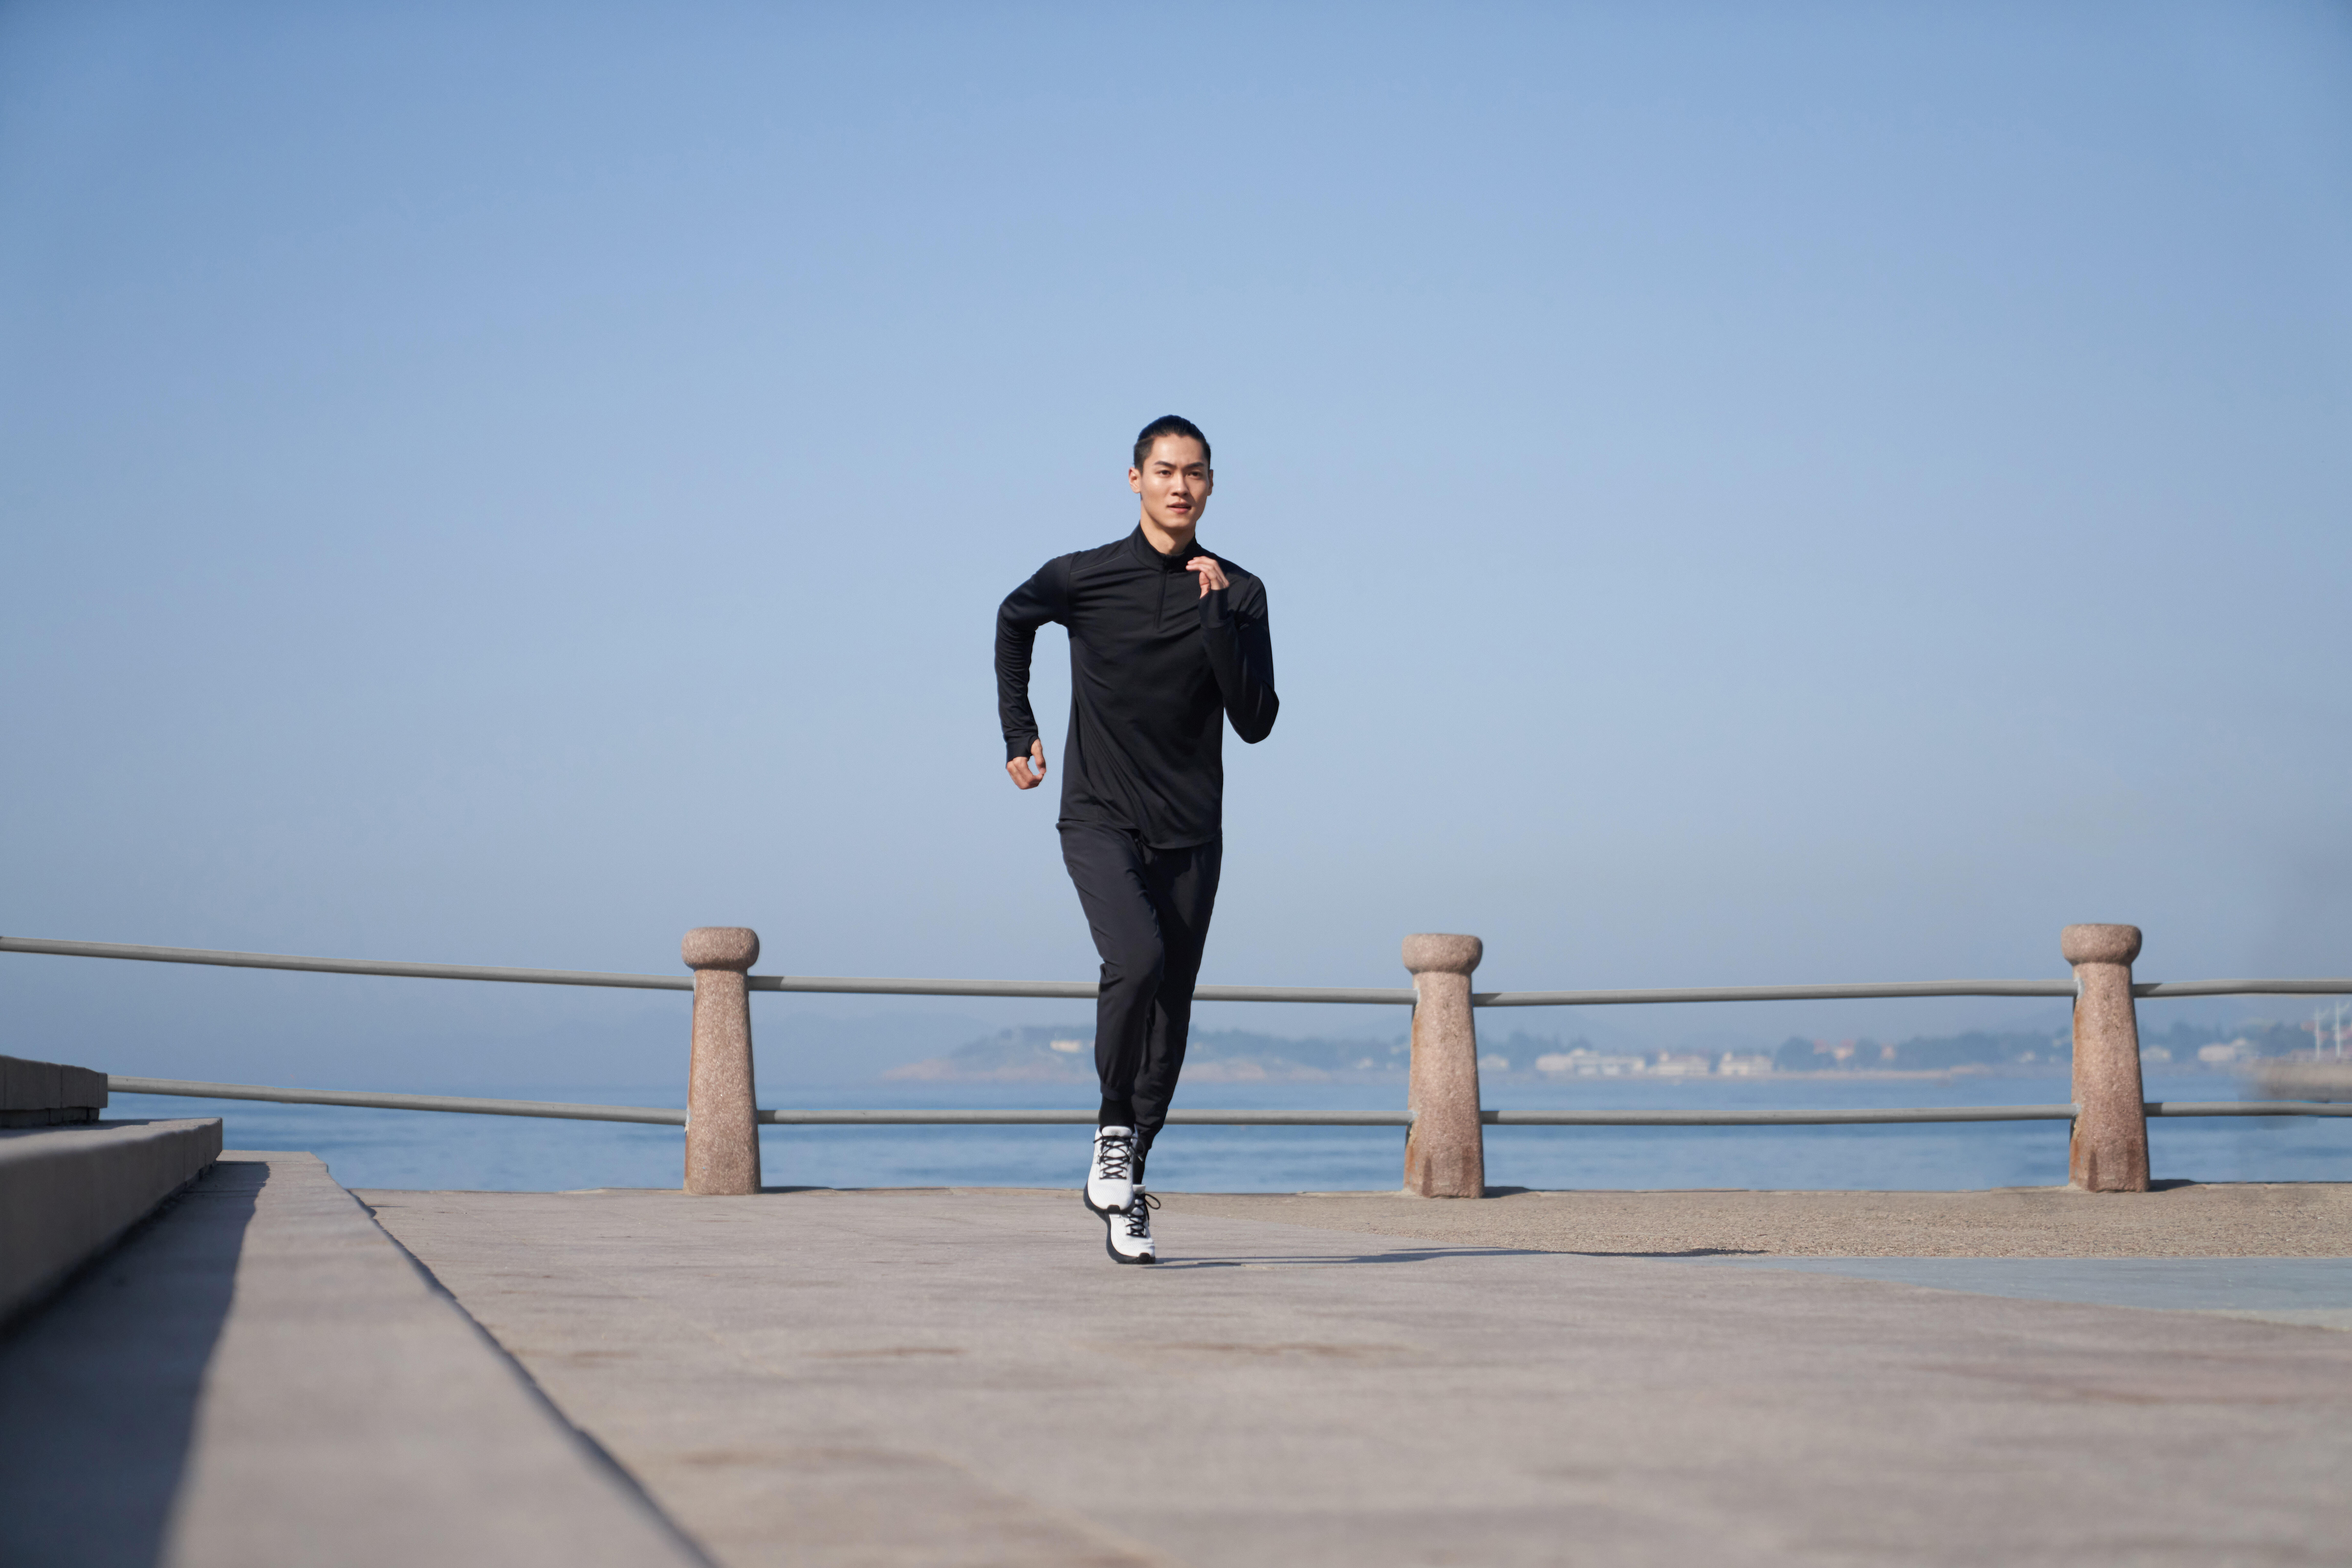 Men's Long-Sleeved Running Shirt - Black - KALENJI